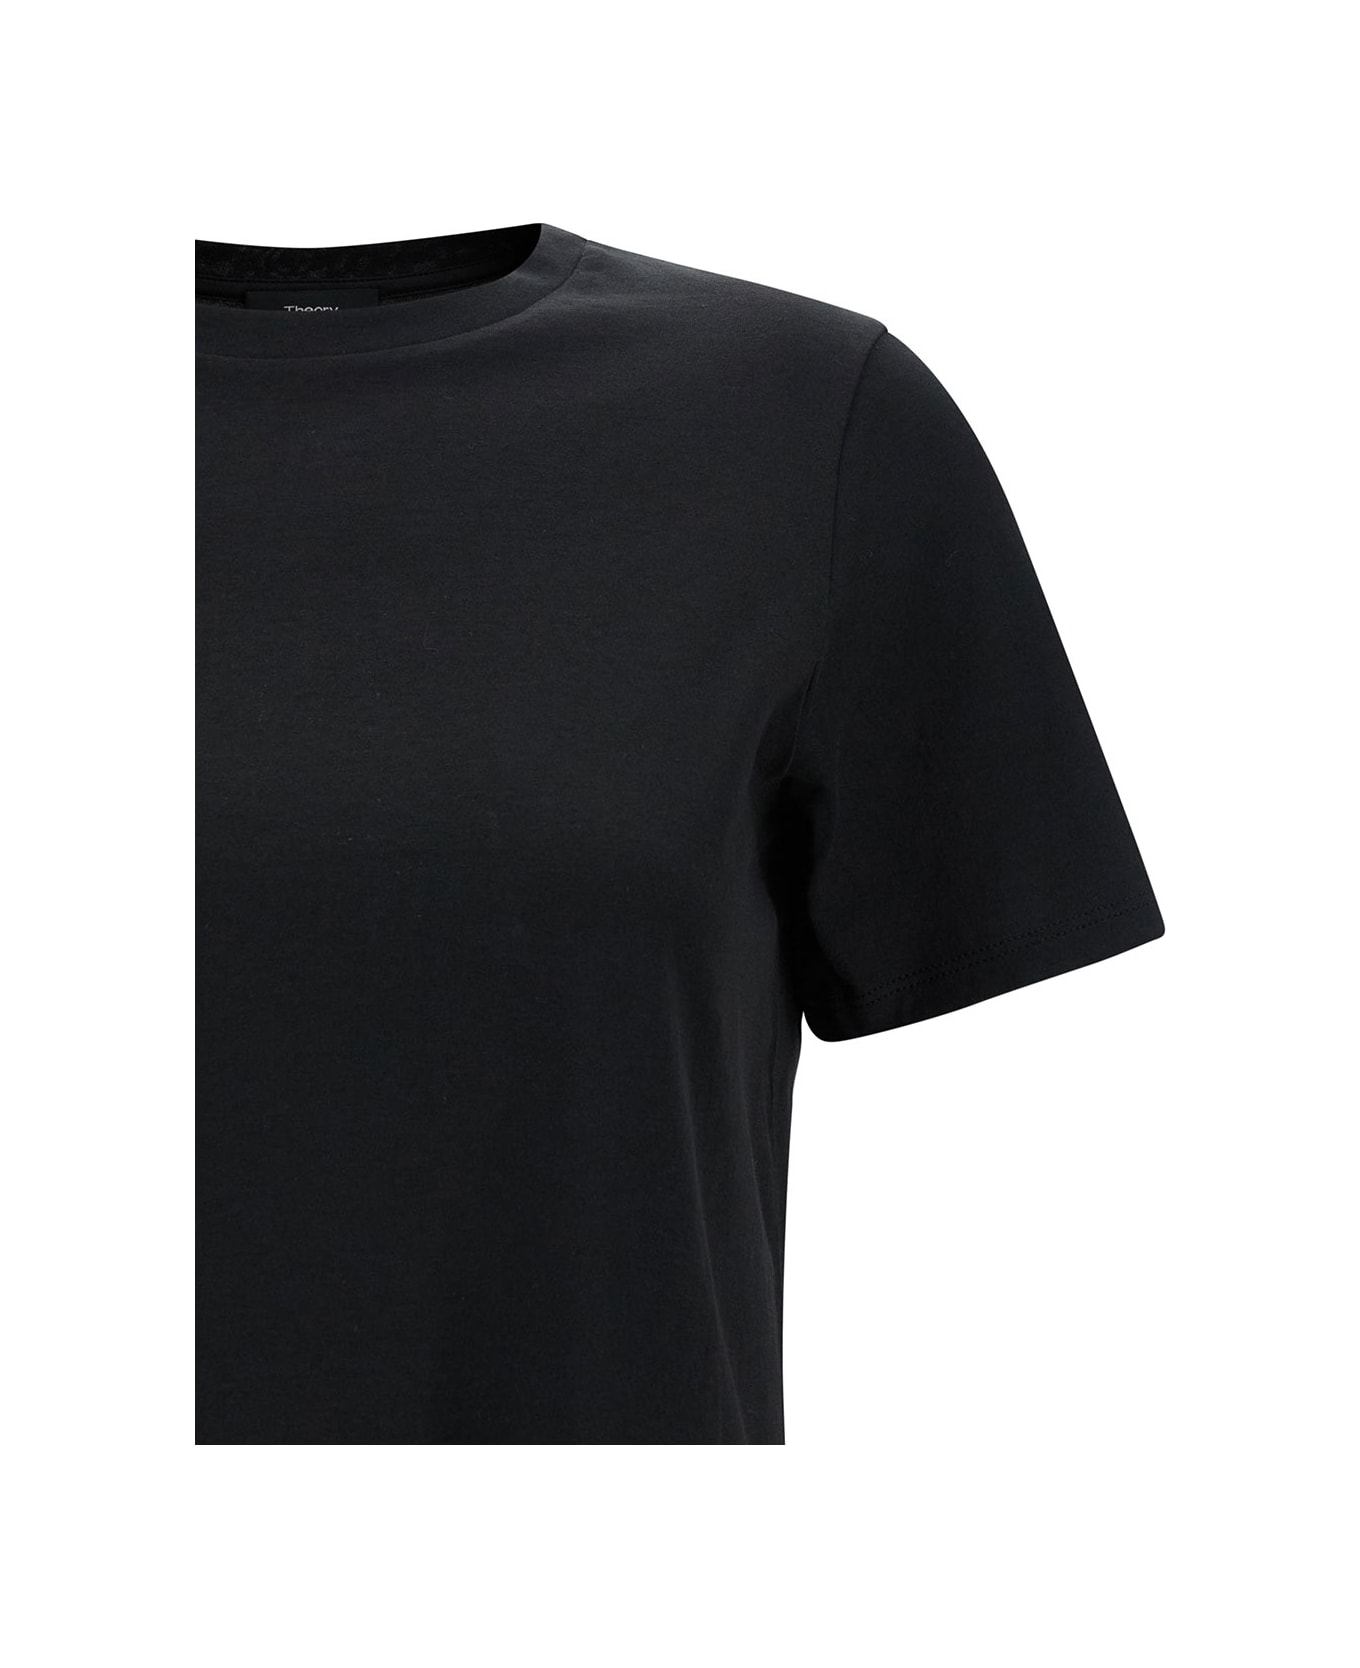 Theory Black Crewneck T-shirt In Cotton Woman - Black